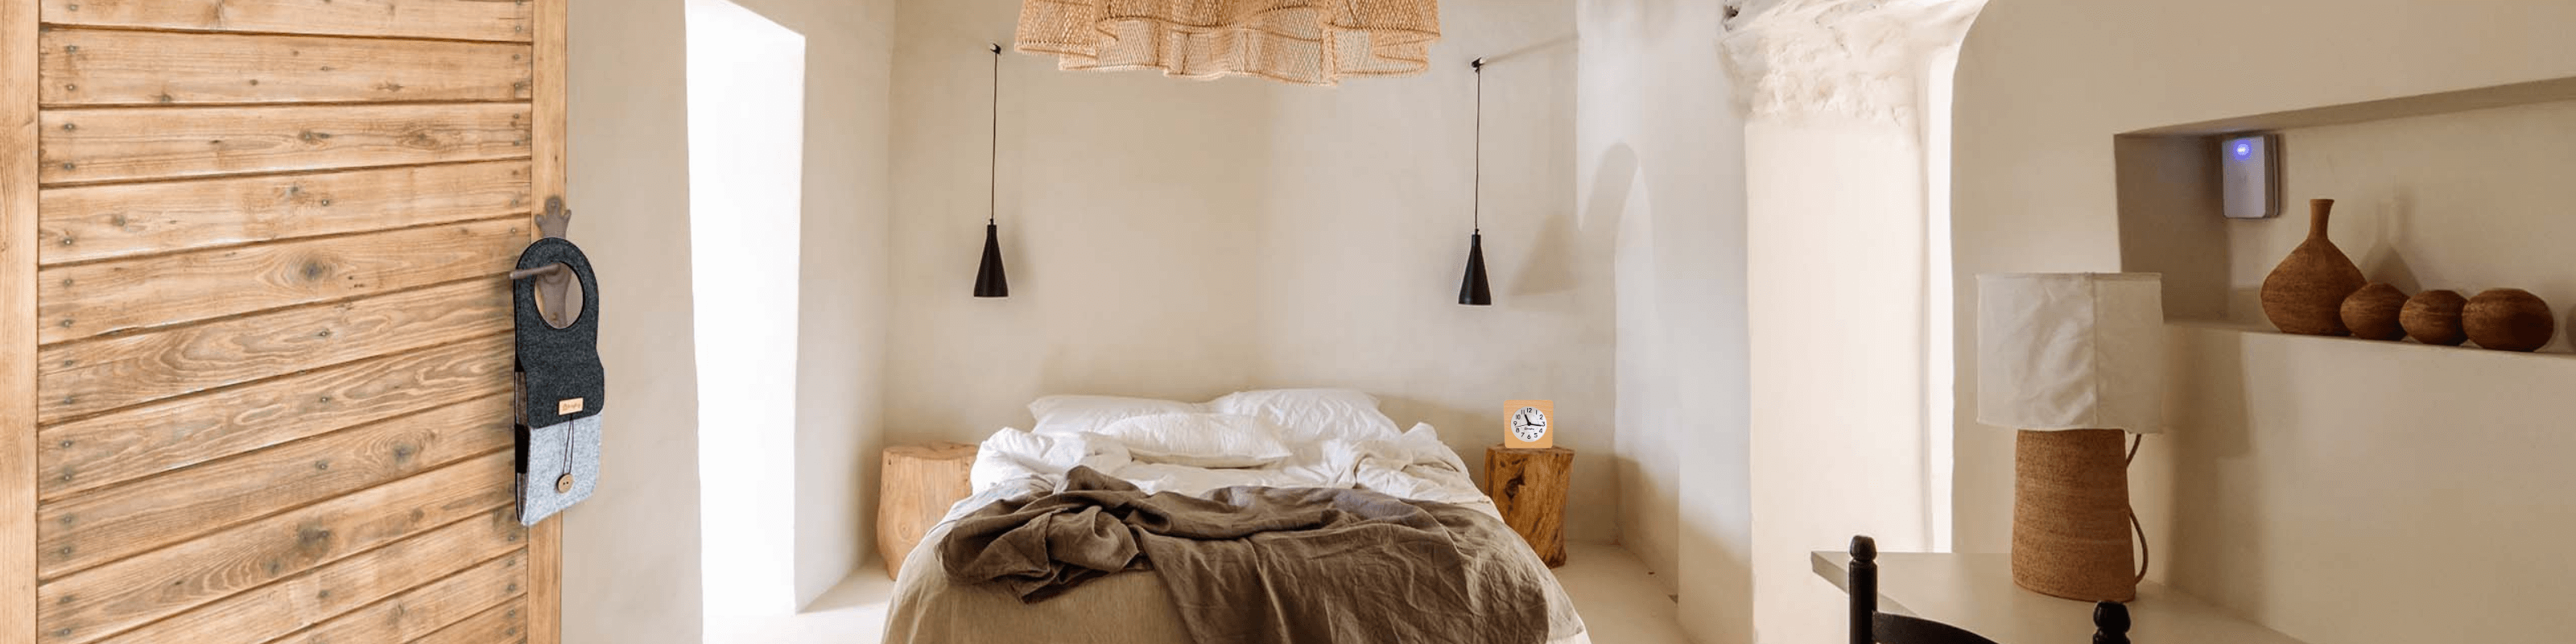 Digital wellness for the bedroom